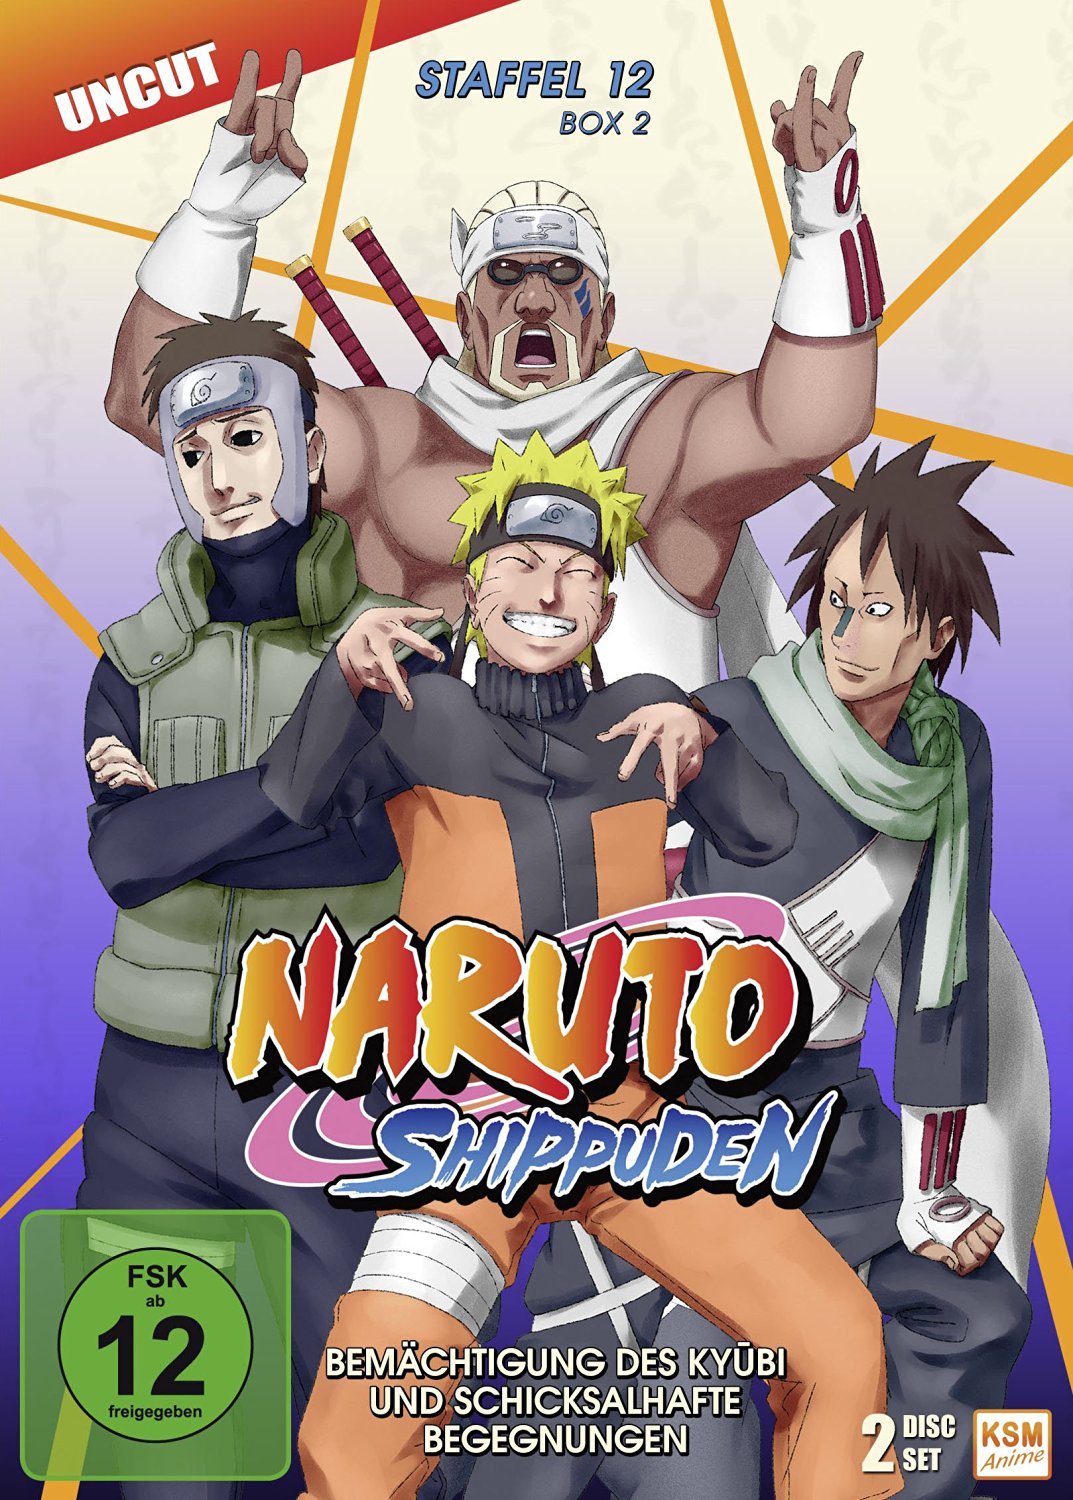 Naruto Shippuden - Staffel 12 Box 2: Episode 488-495 (uncut) [DVD] Cover